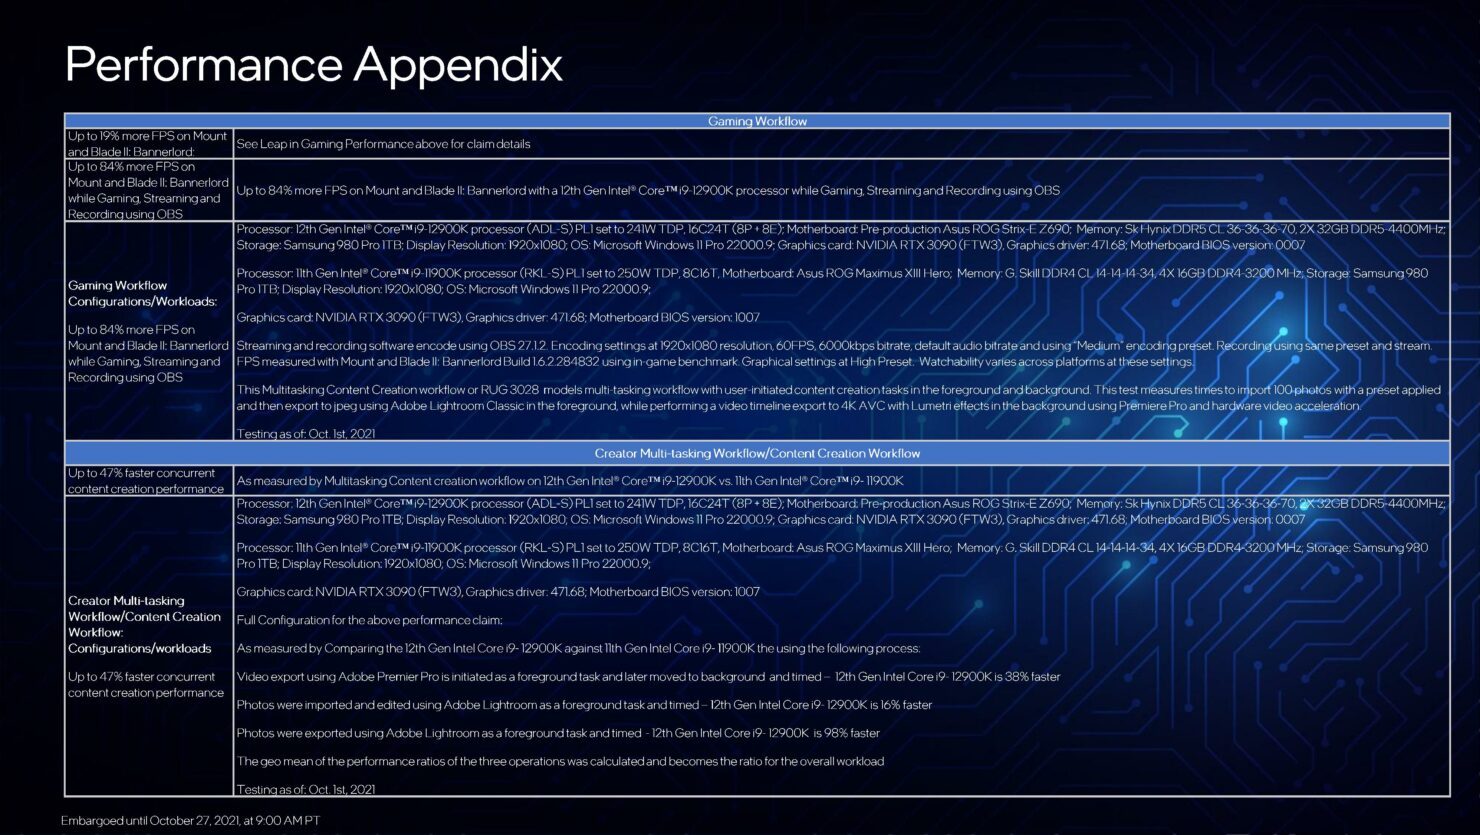 12th-gen-intel-core-desktop-processors-blueprint-presentation-embargoed-until-oct-27-2021-at-9-00am-pt-page-065-1480x835-5550602